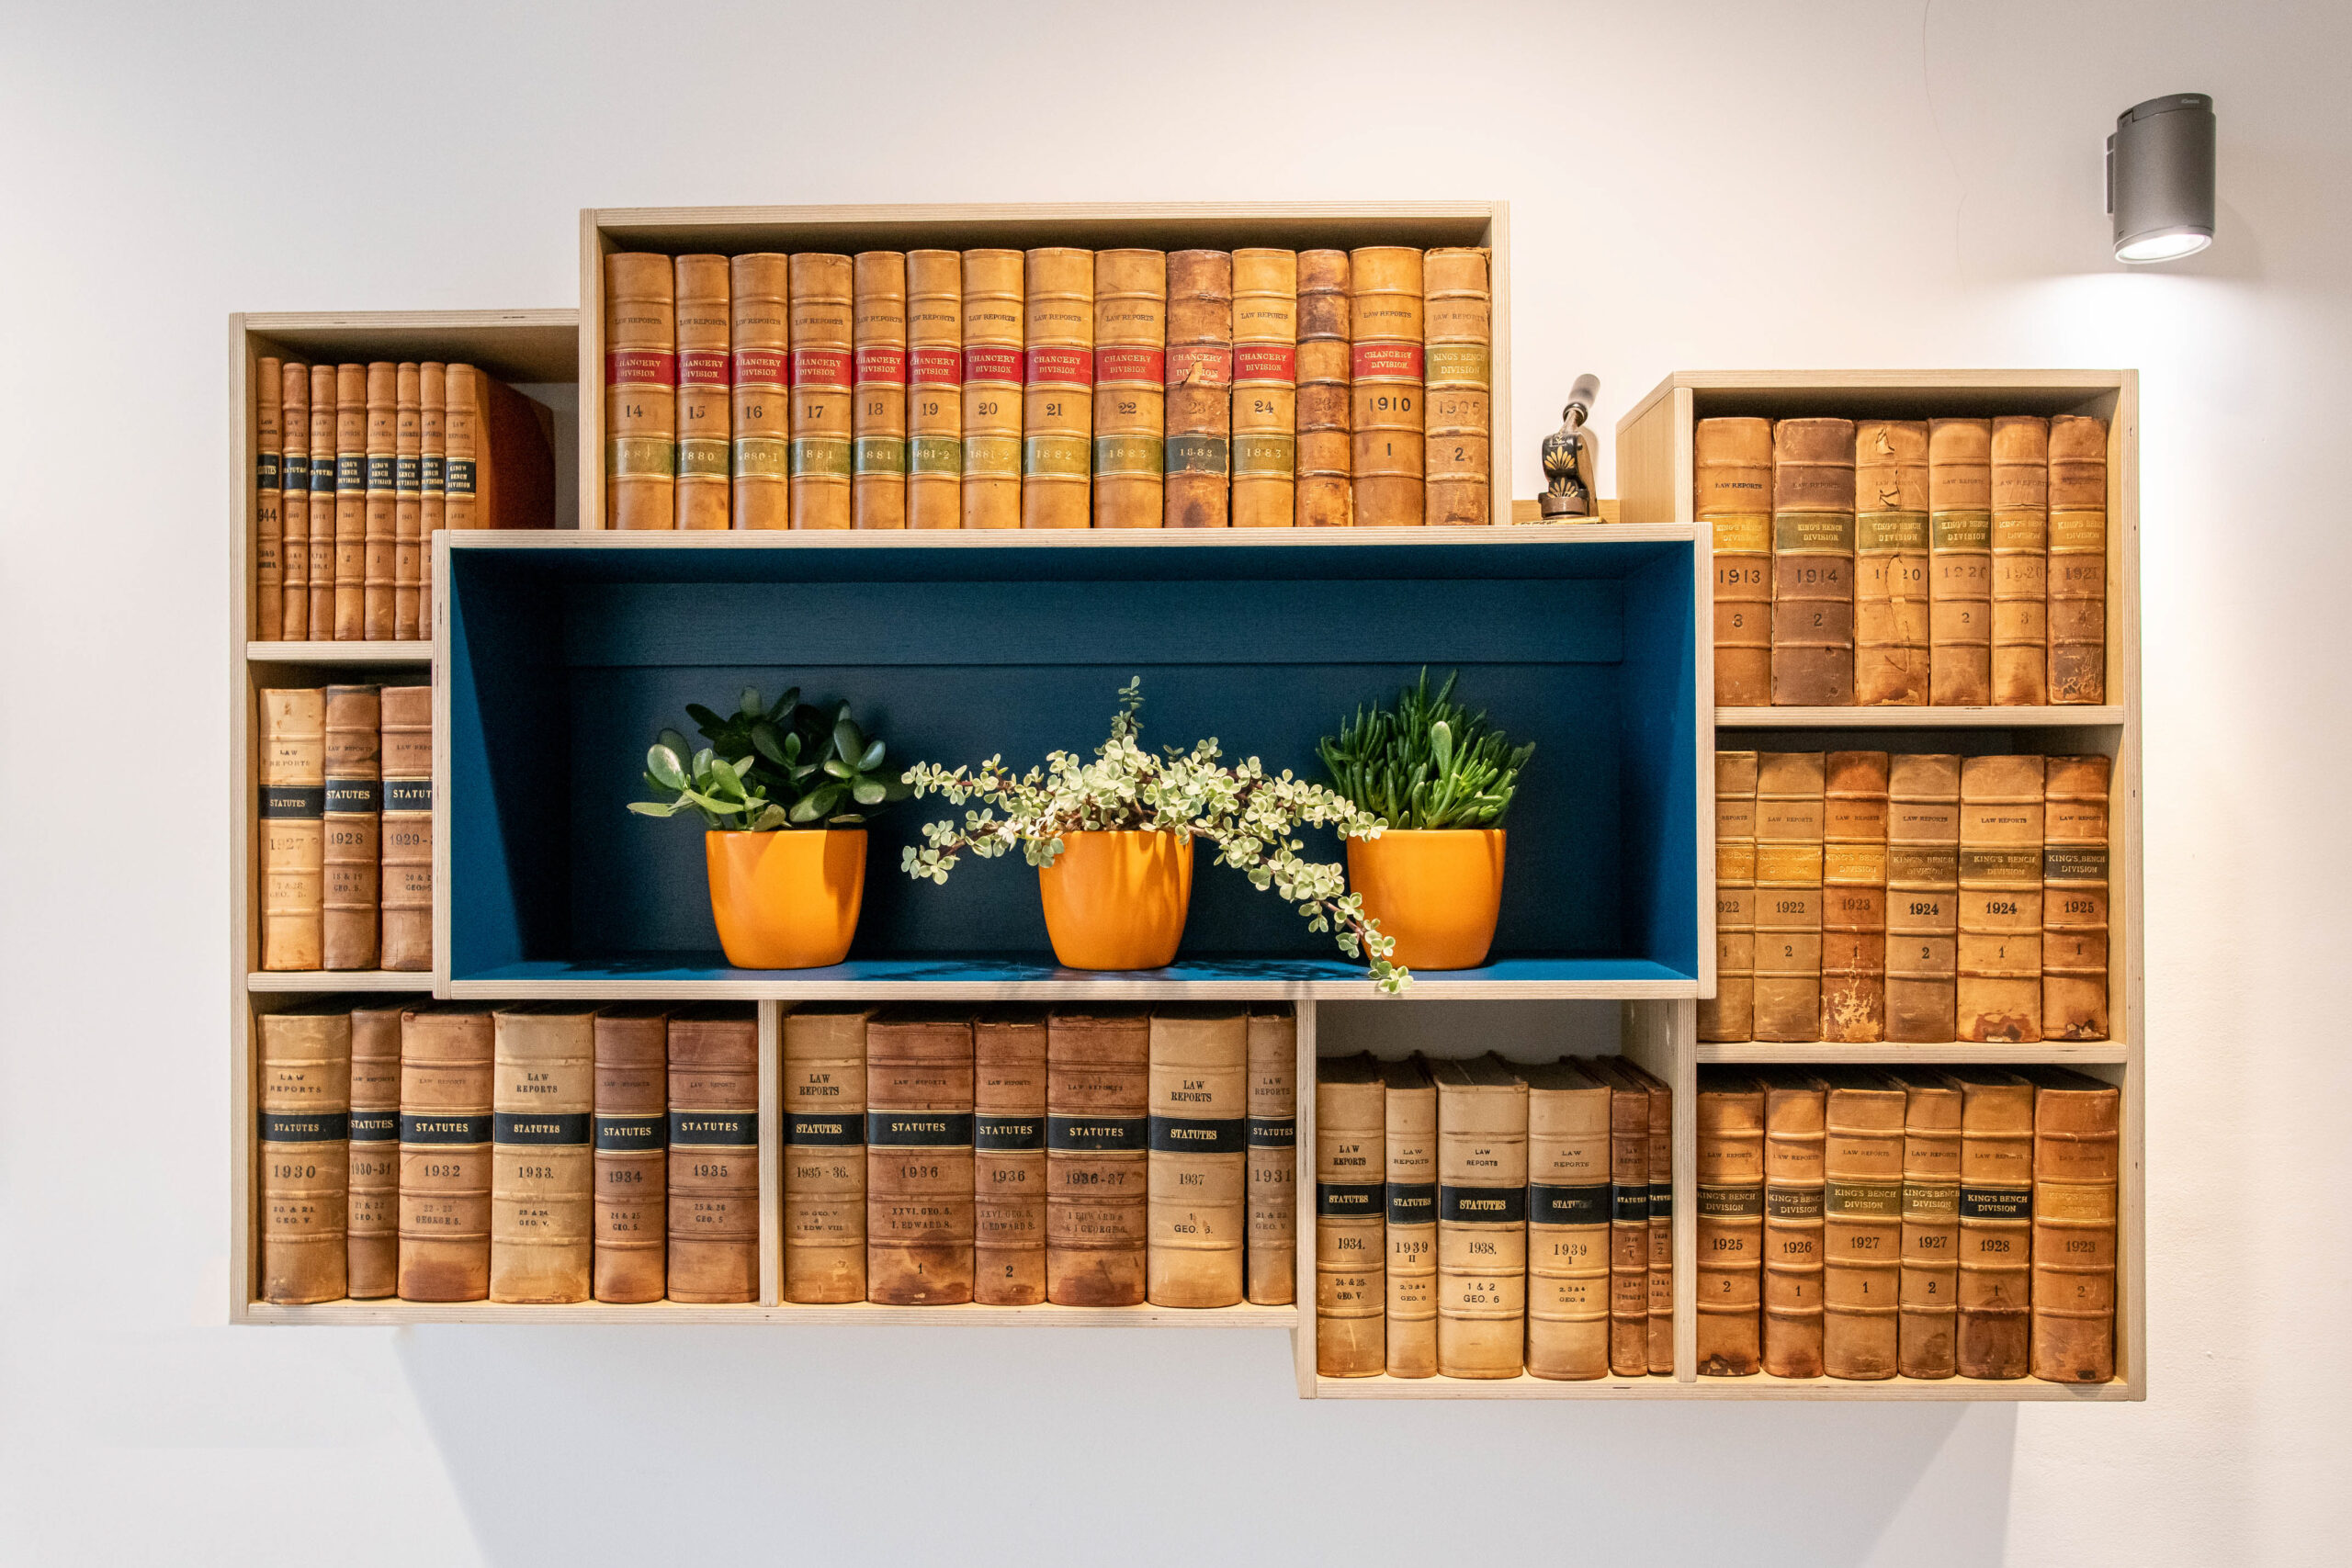 Bookshelf with plants inside